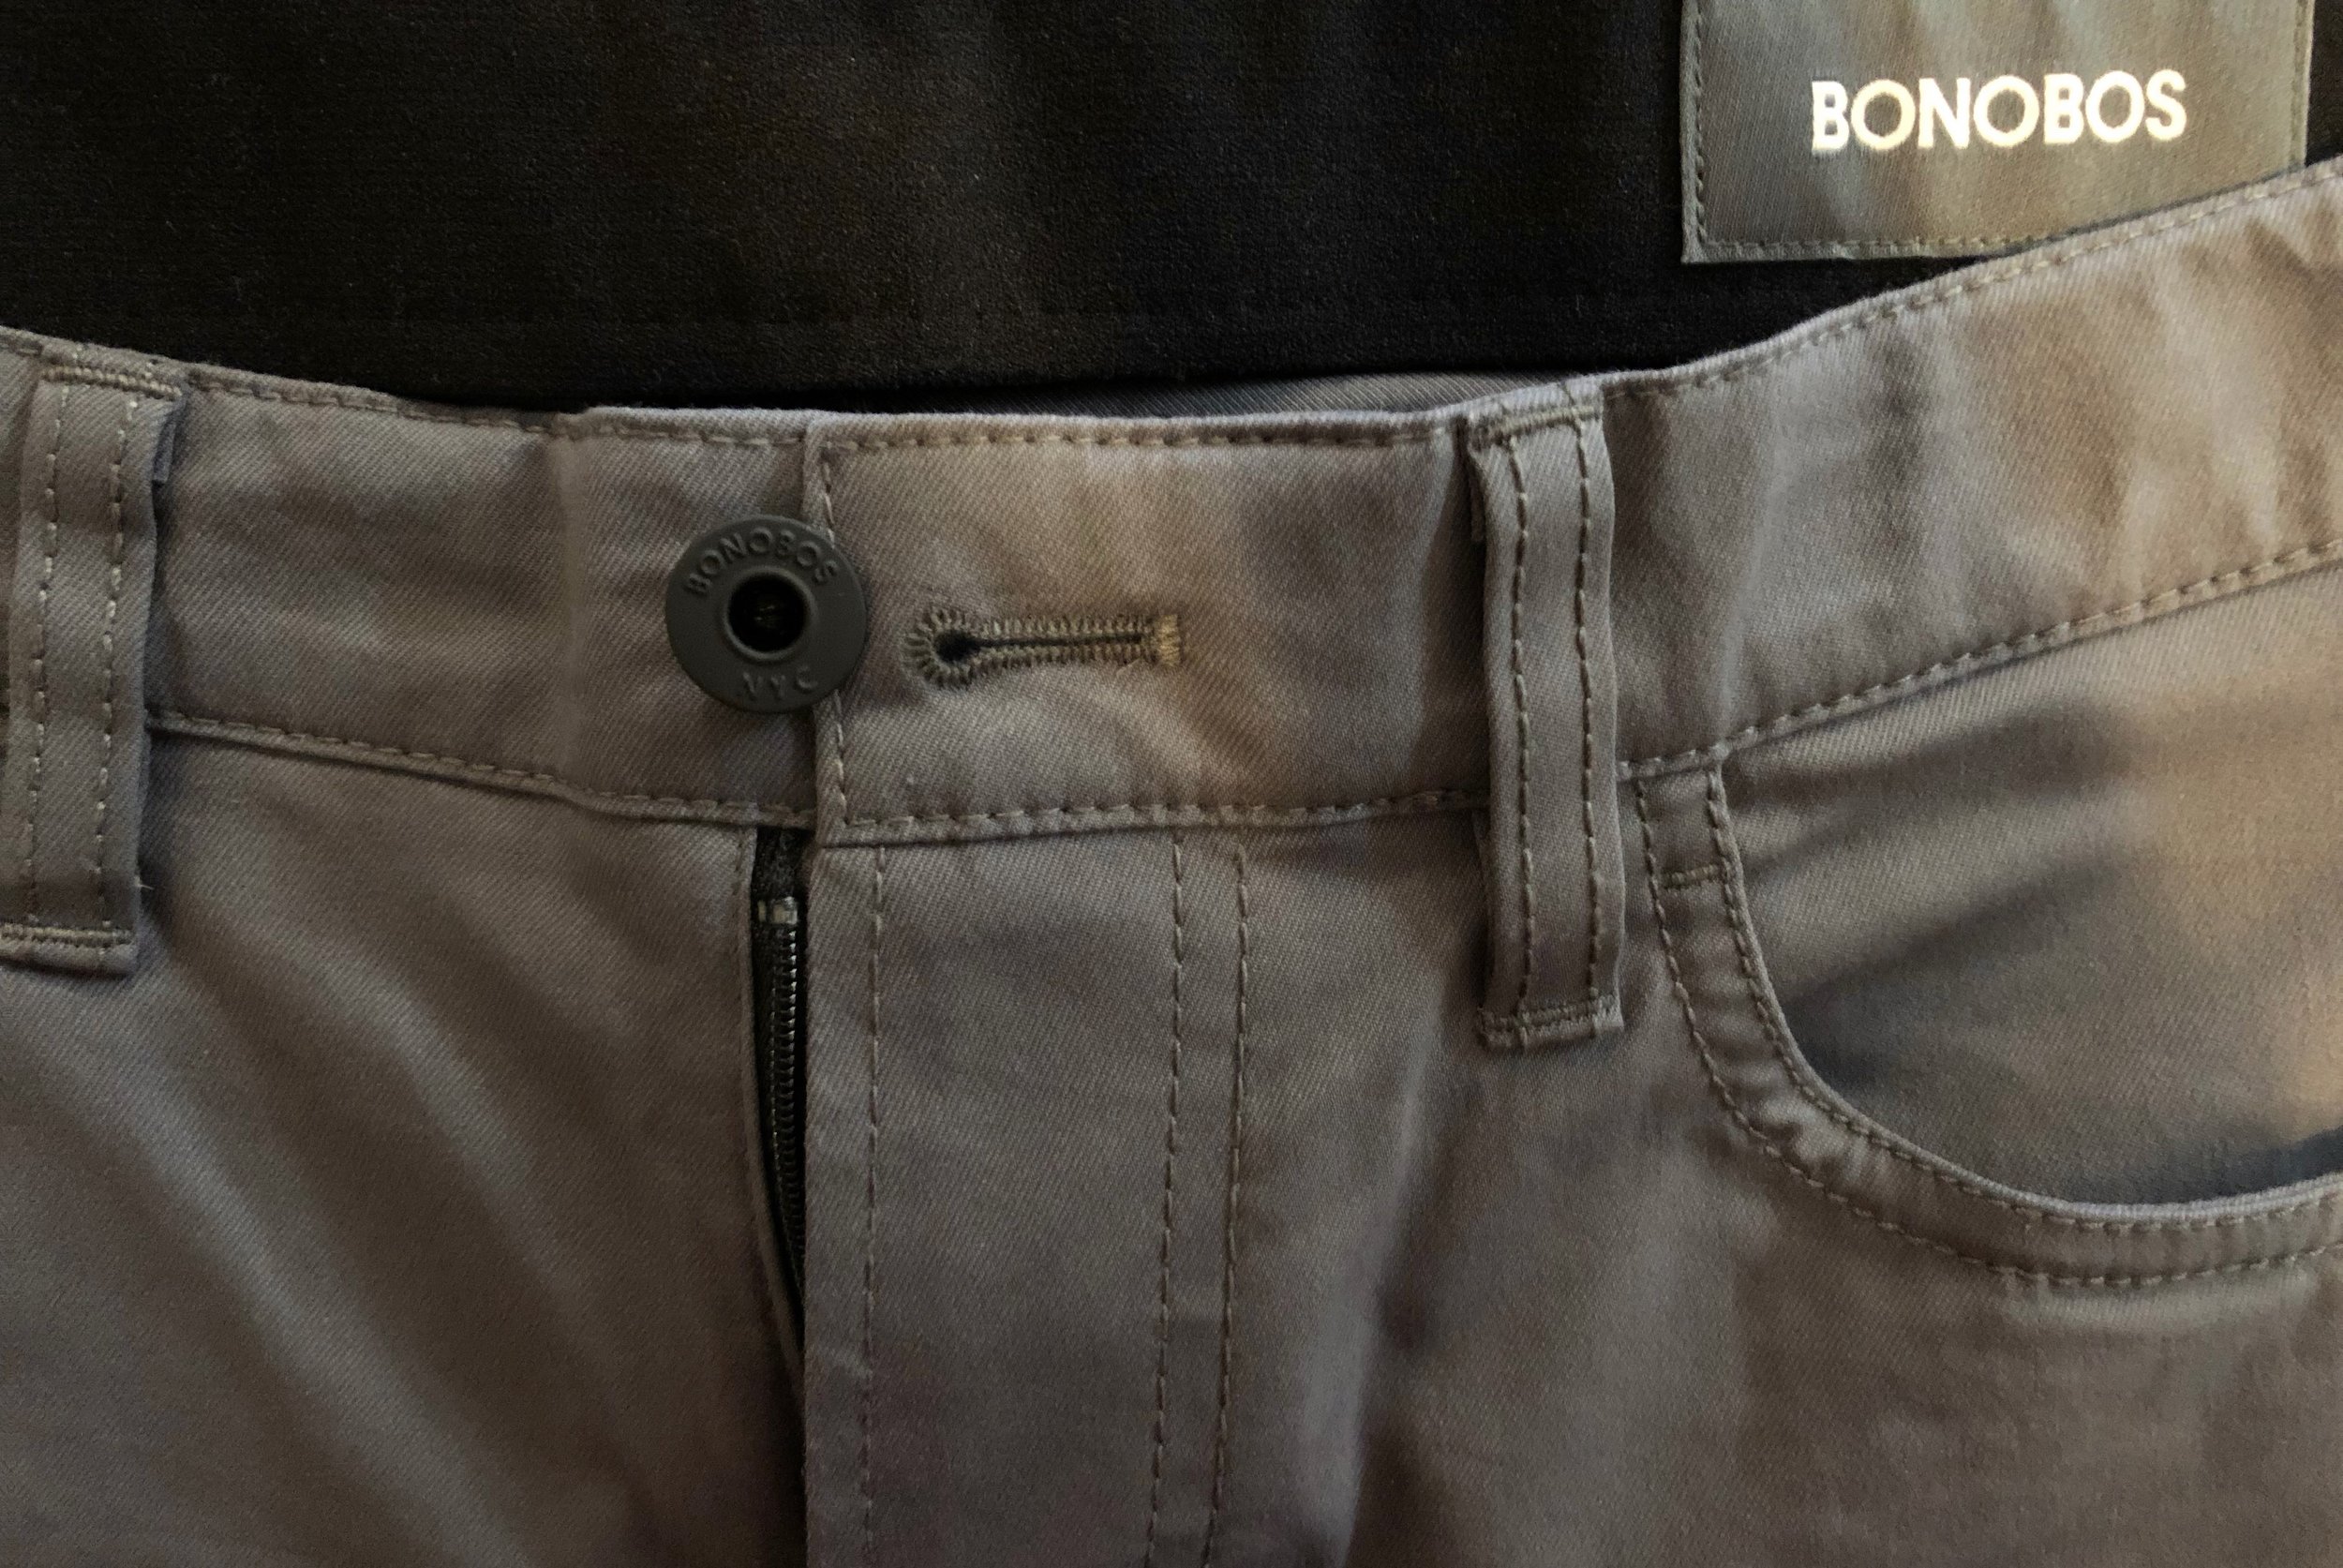 Review: The Insanely Comfortable Bonobos Tech 5-Pocket Pant — The Peak Lapel